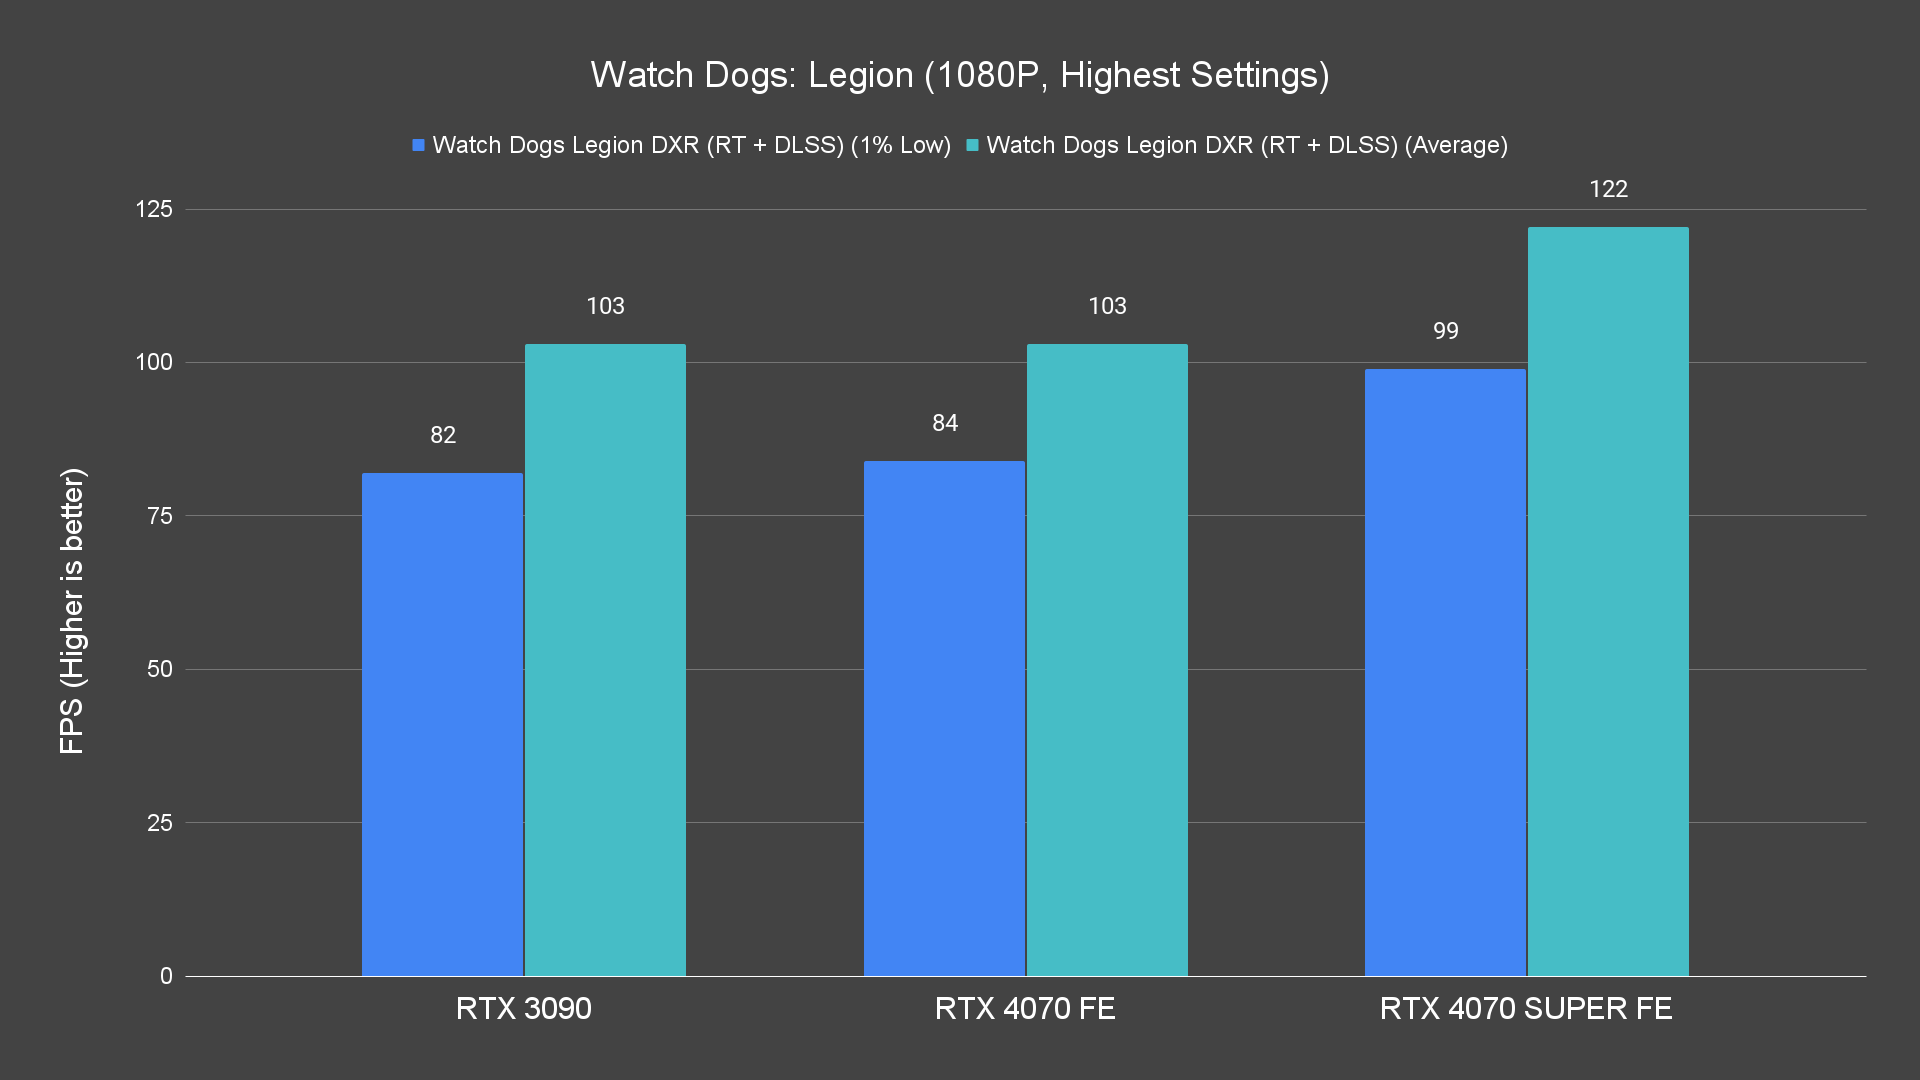 Watch Dogs Legion (1080P, Highest Settings) (1)